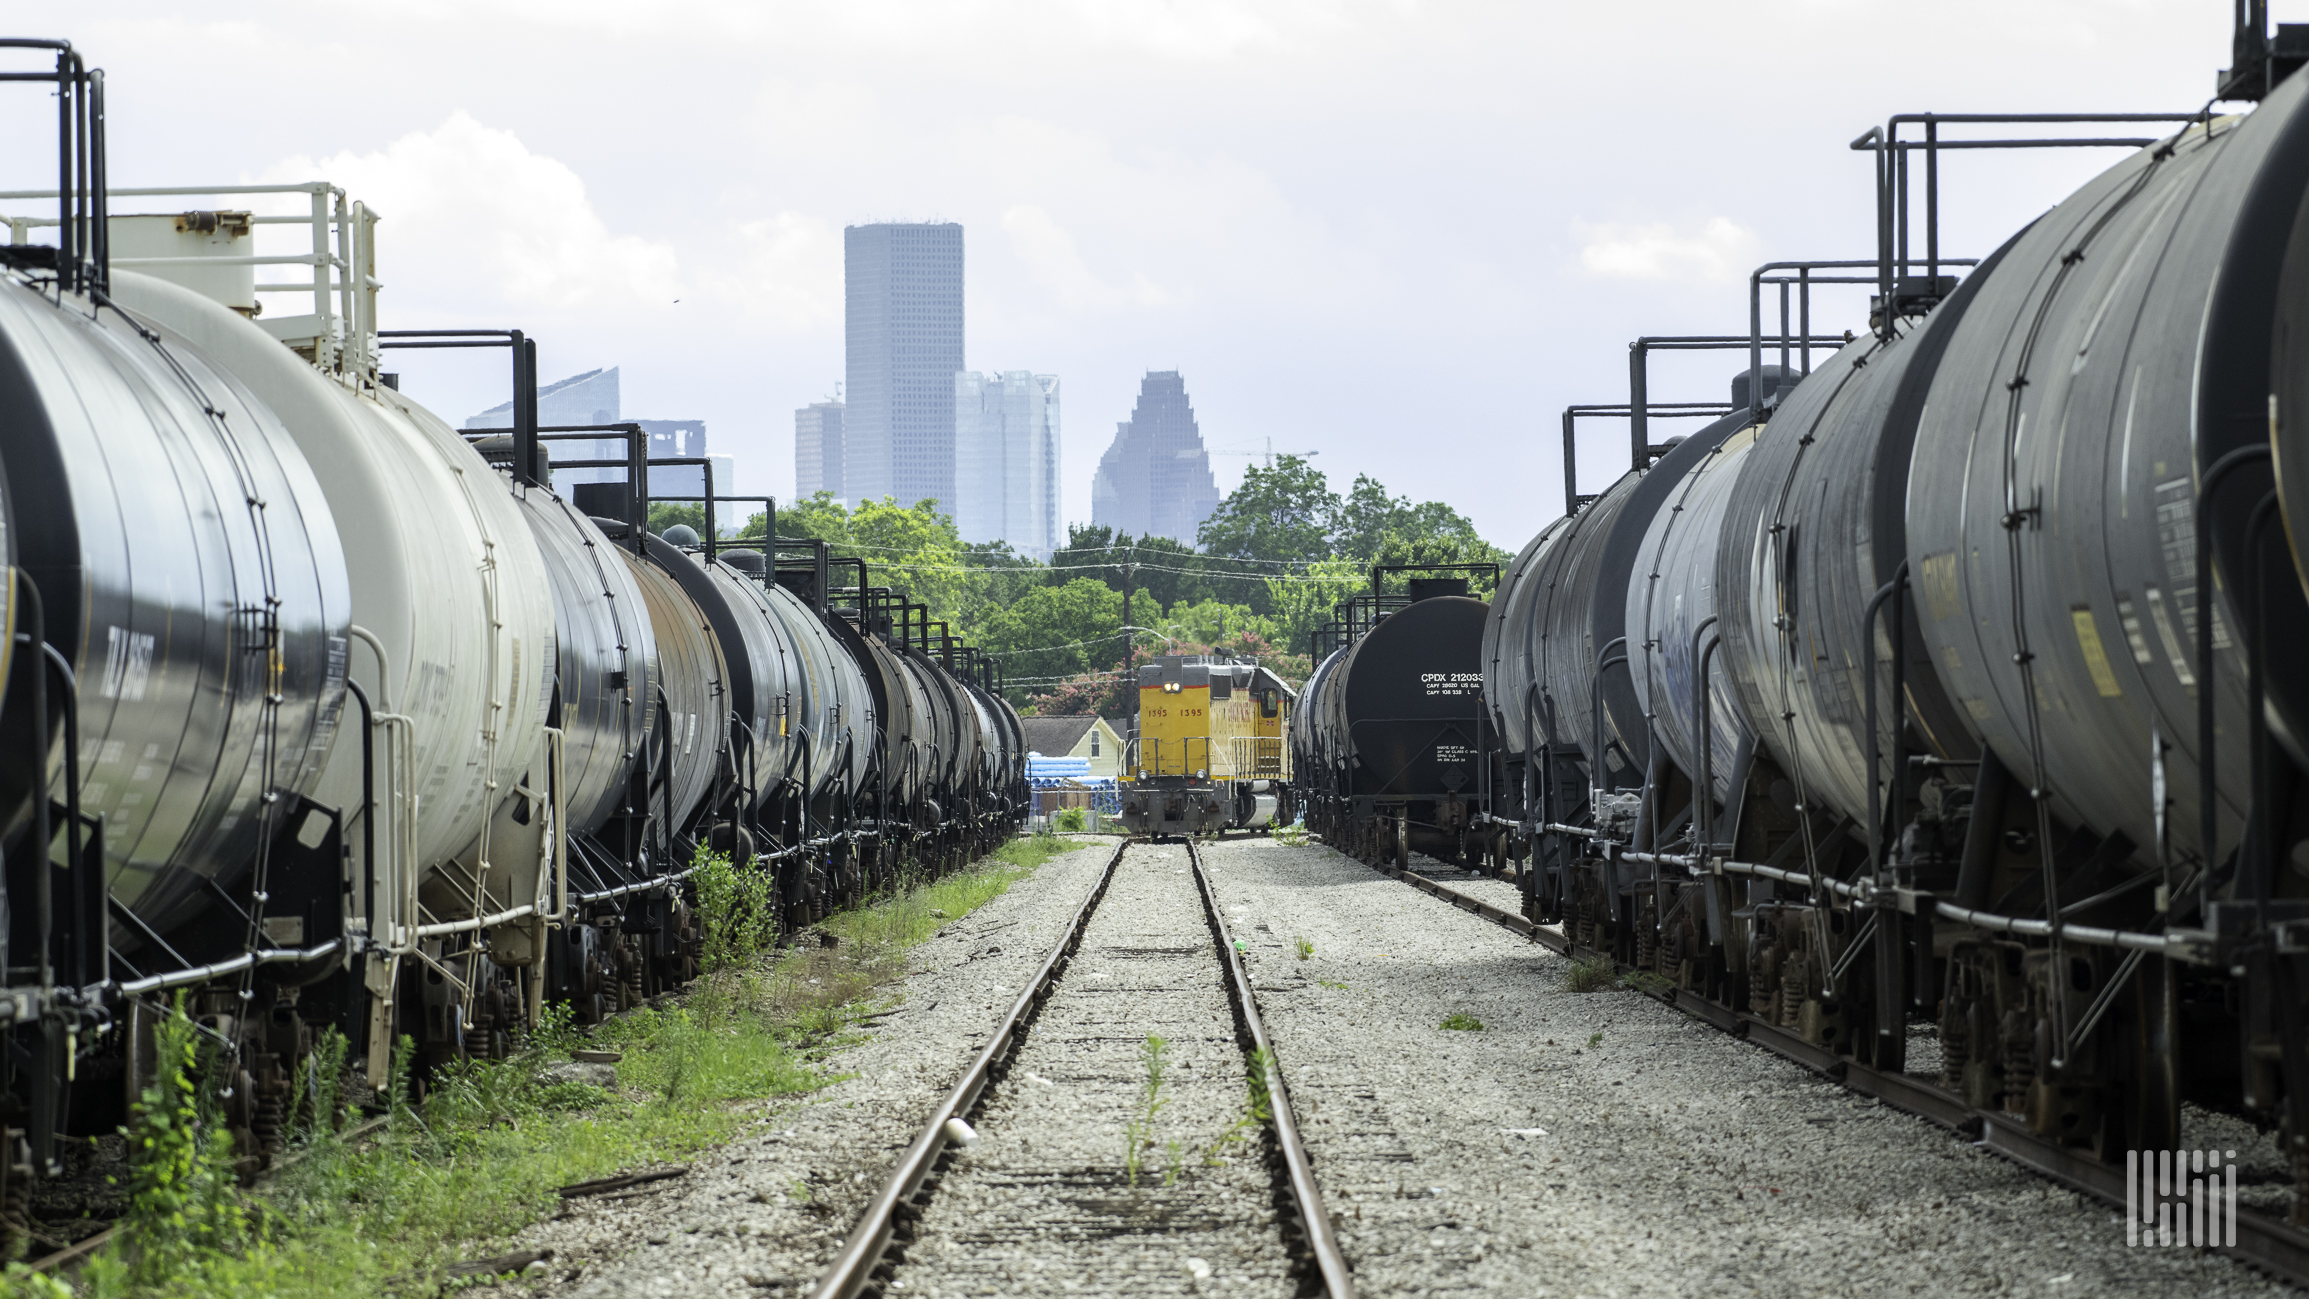 A photograph of a Union Pacific train at a rail yard.